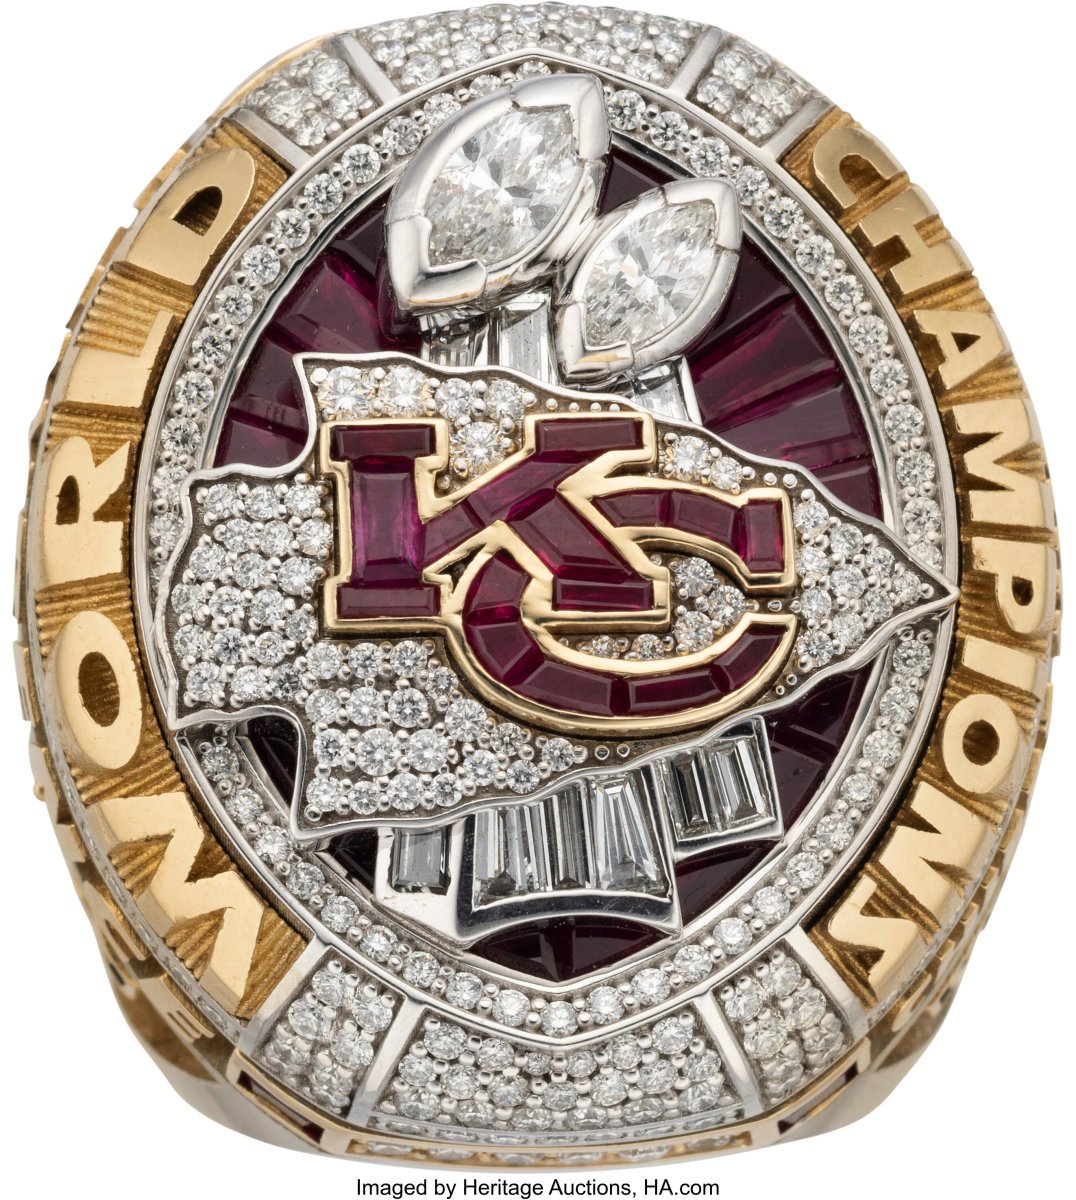 2019 Kansas City Chiefs Super Bowl ring.